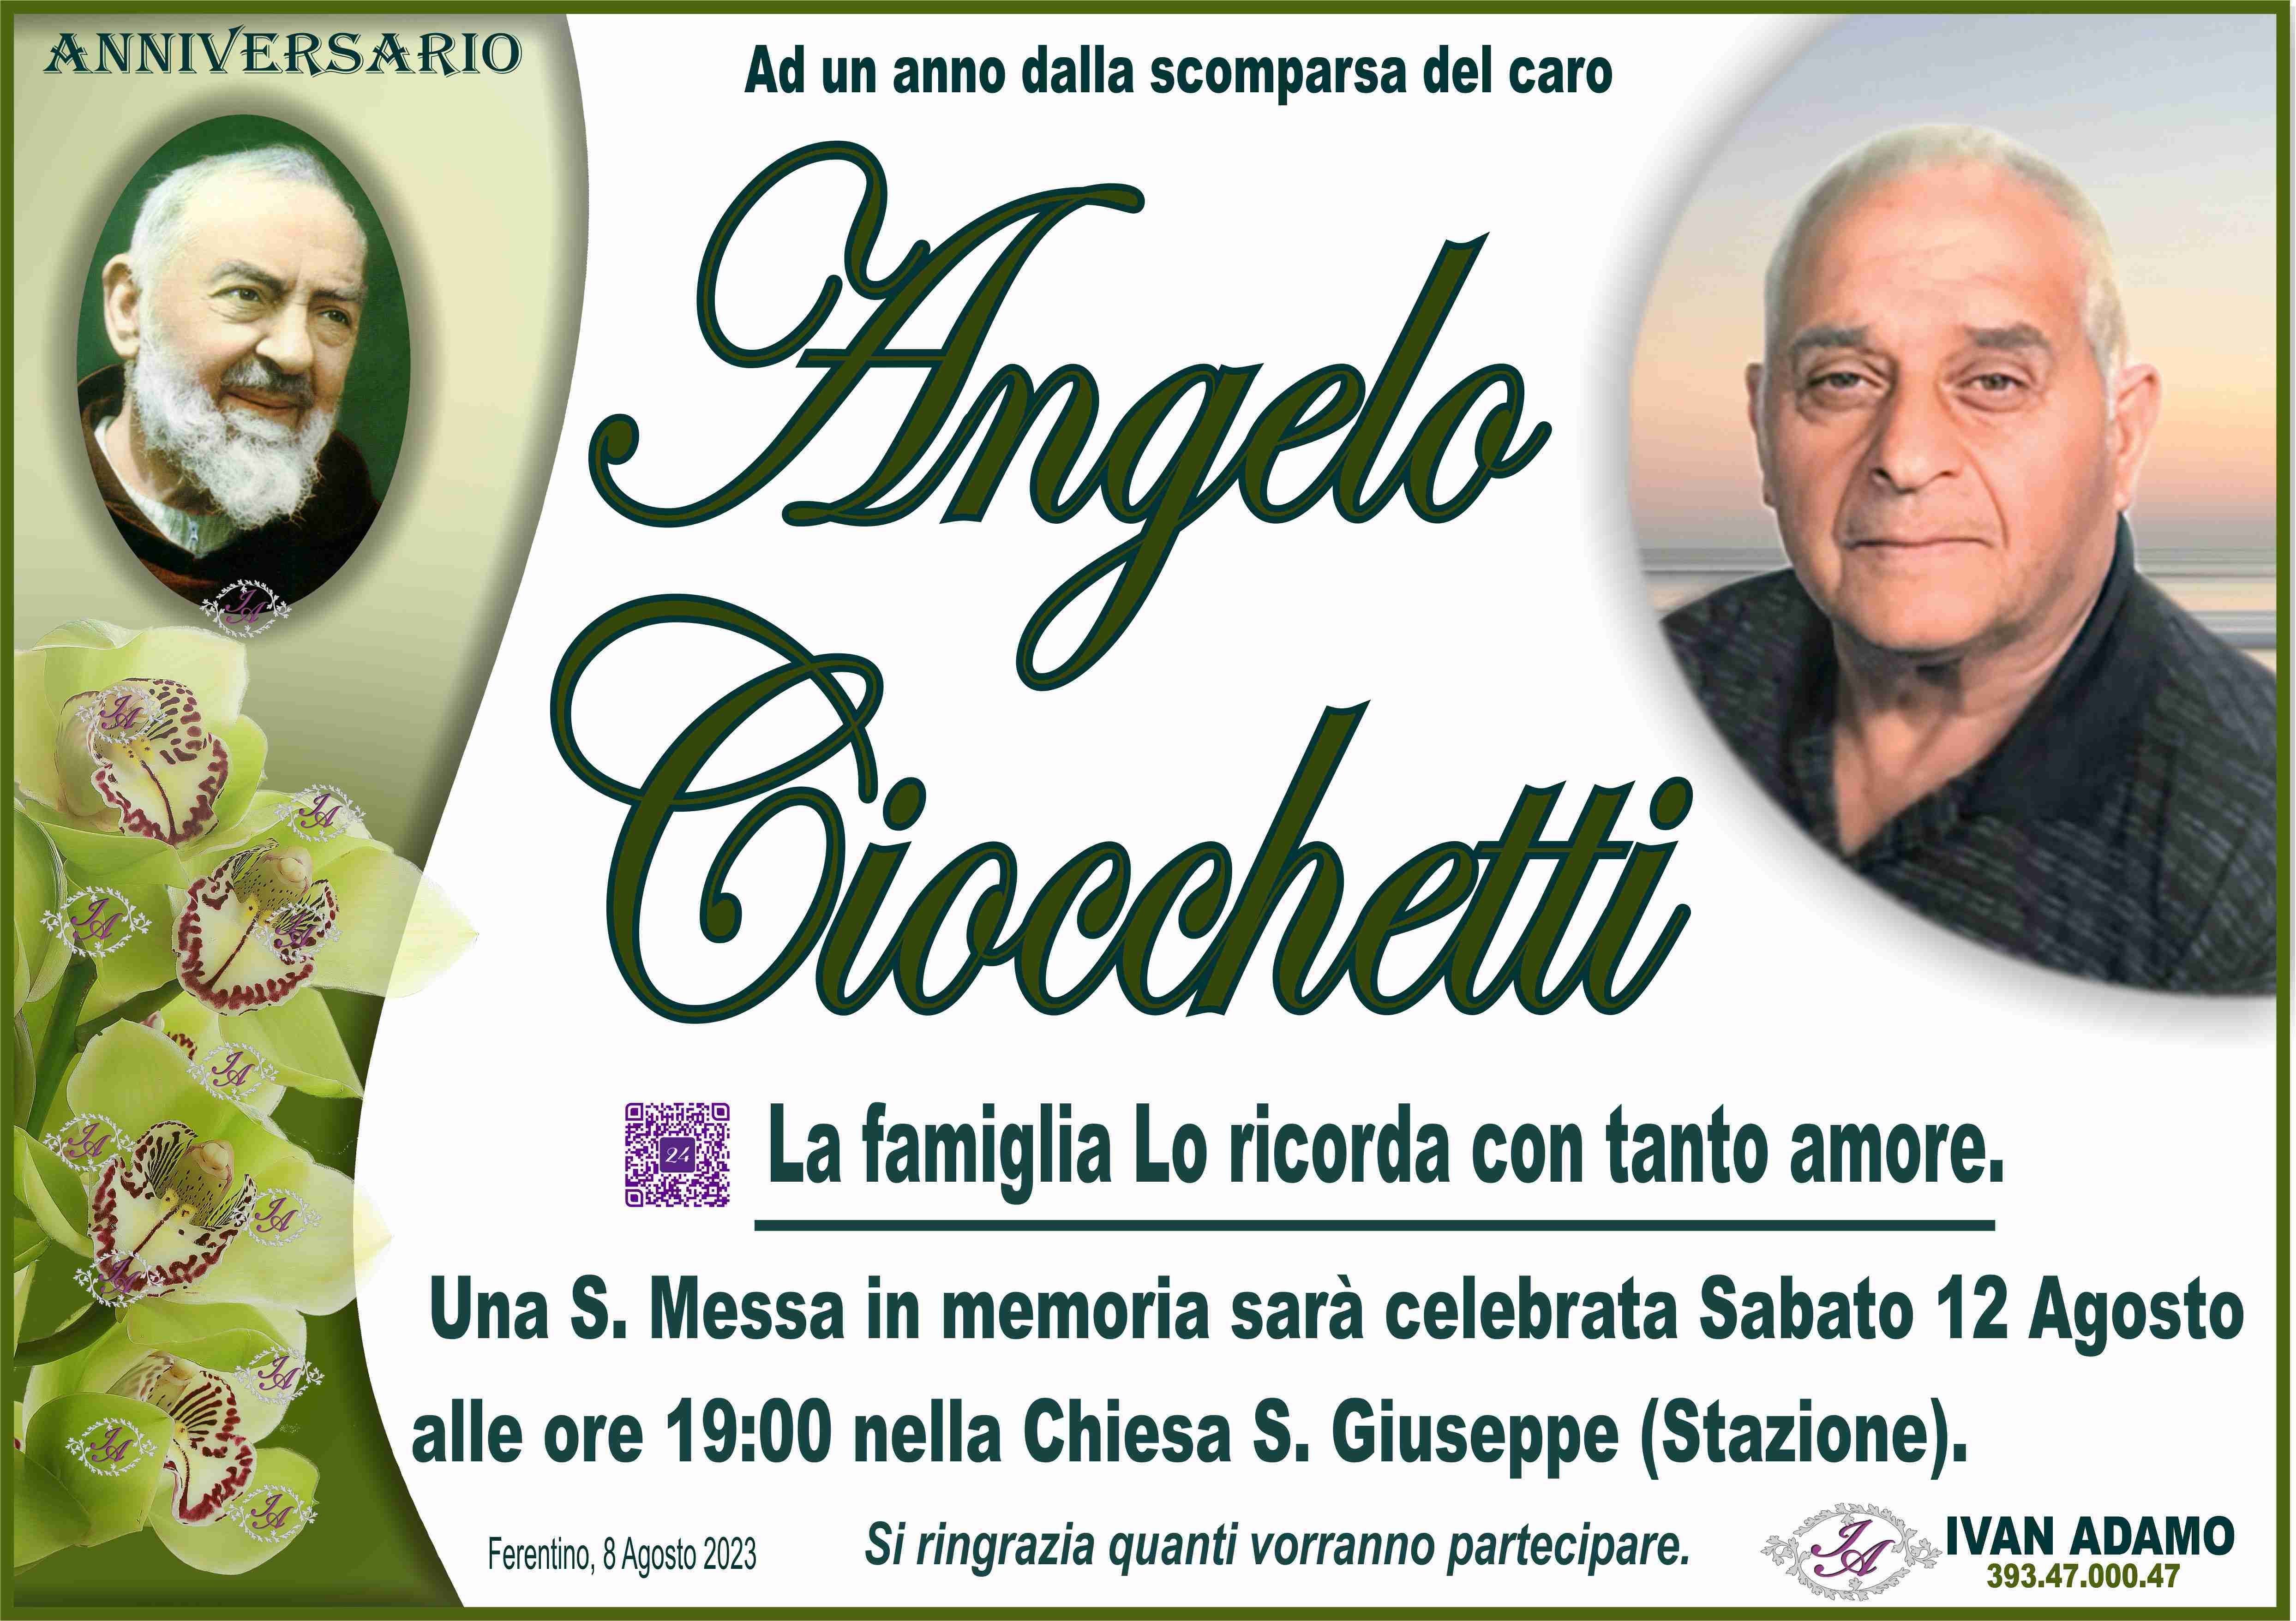 Angelo Ciocchetti